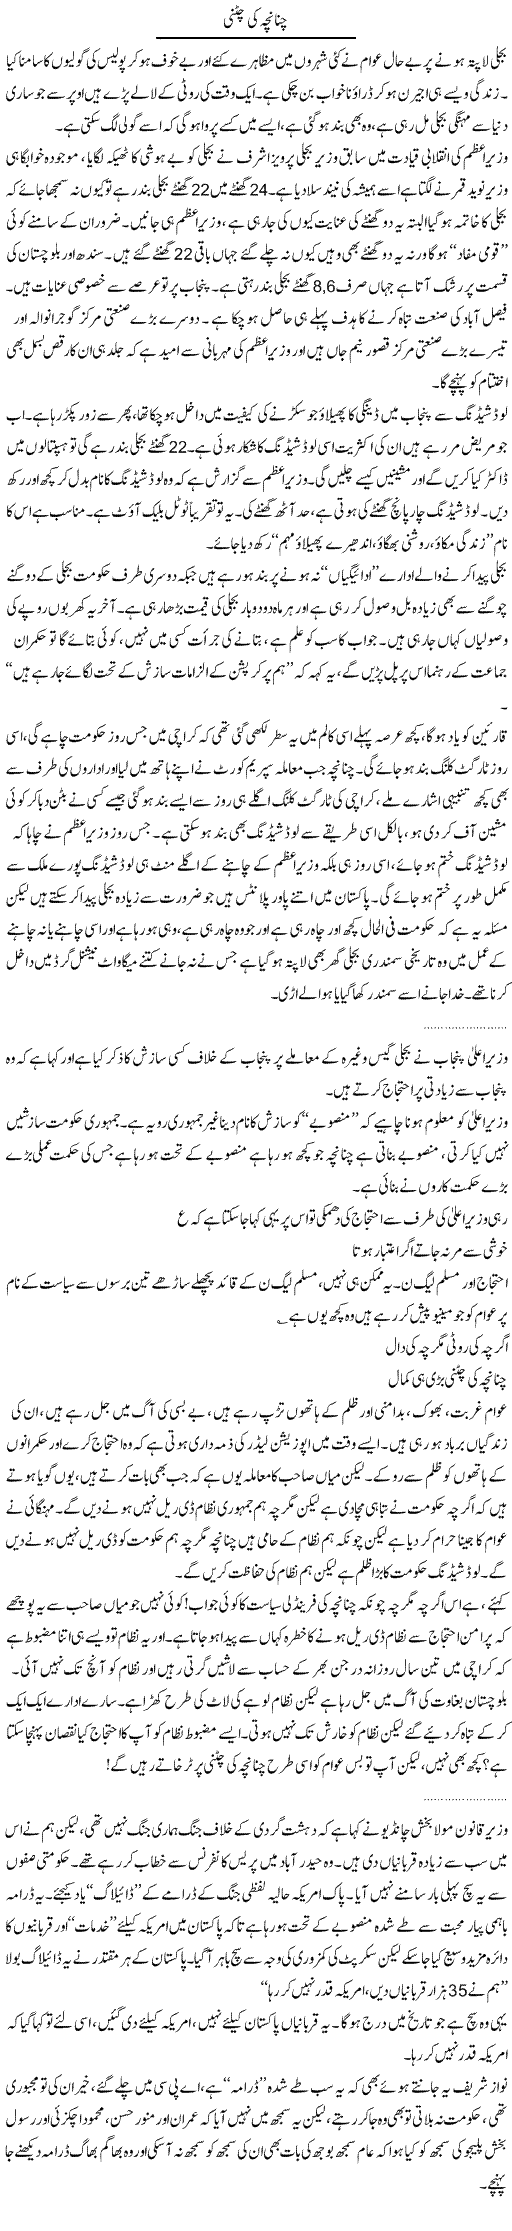 Load Shedding Express Column Abdullah Tariq 4 October 2011